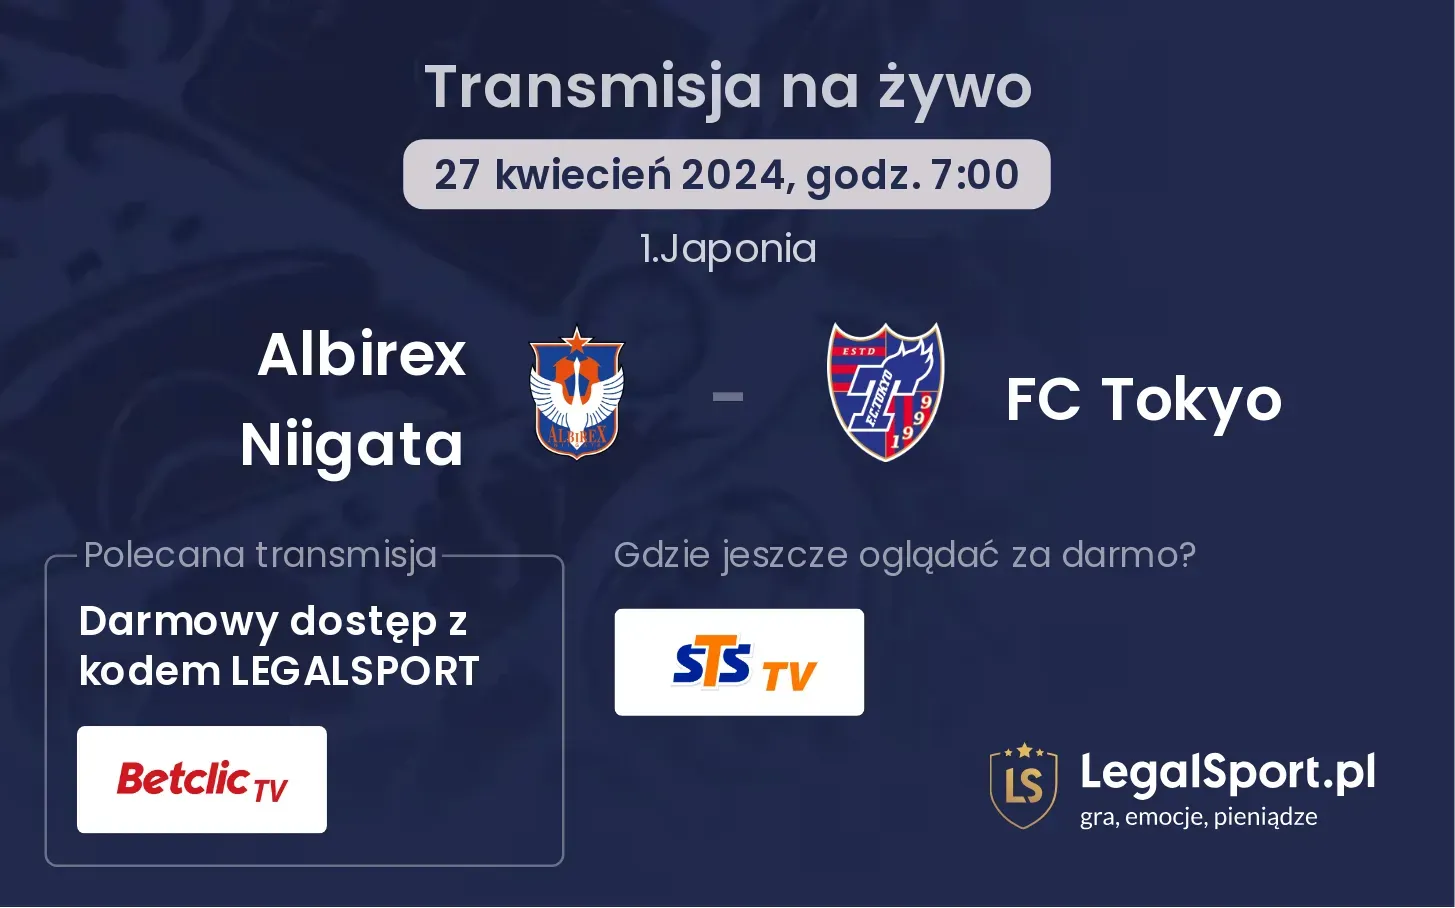 Albirex Niigata - FC Tokyo transmisja na żywo